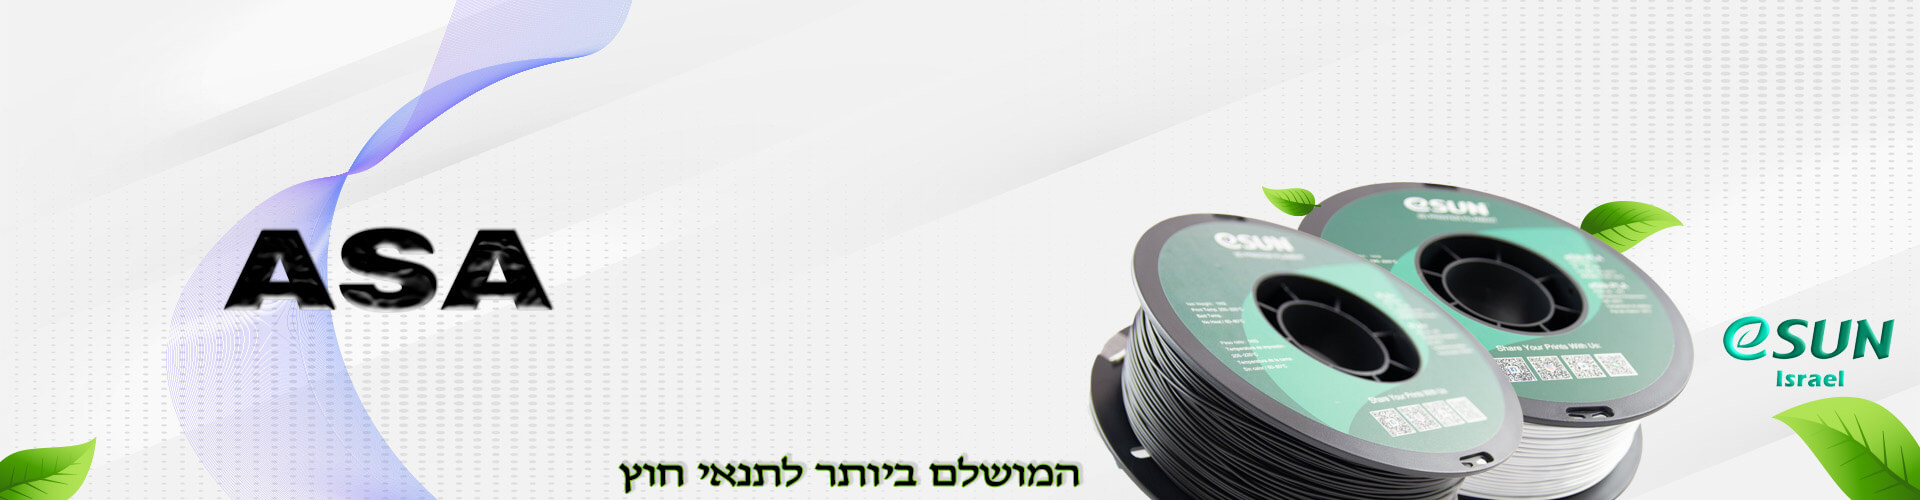 esun-israel-asa-3d-filament-for-uv-use